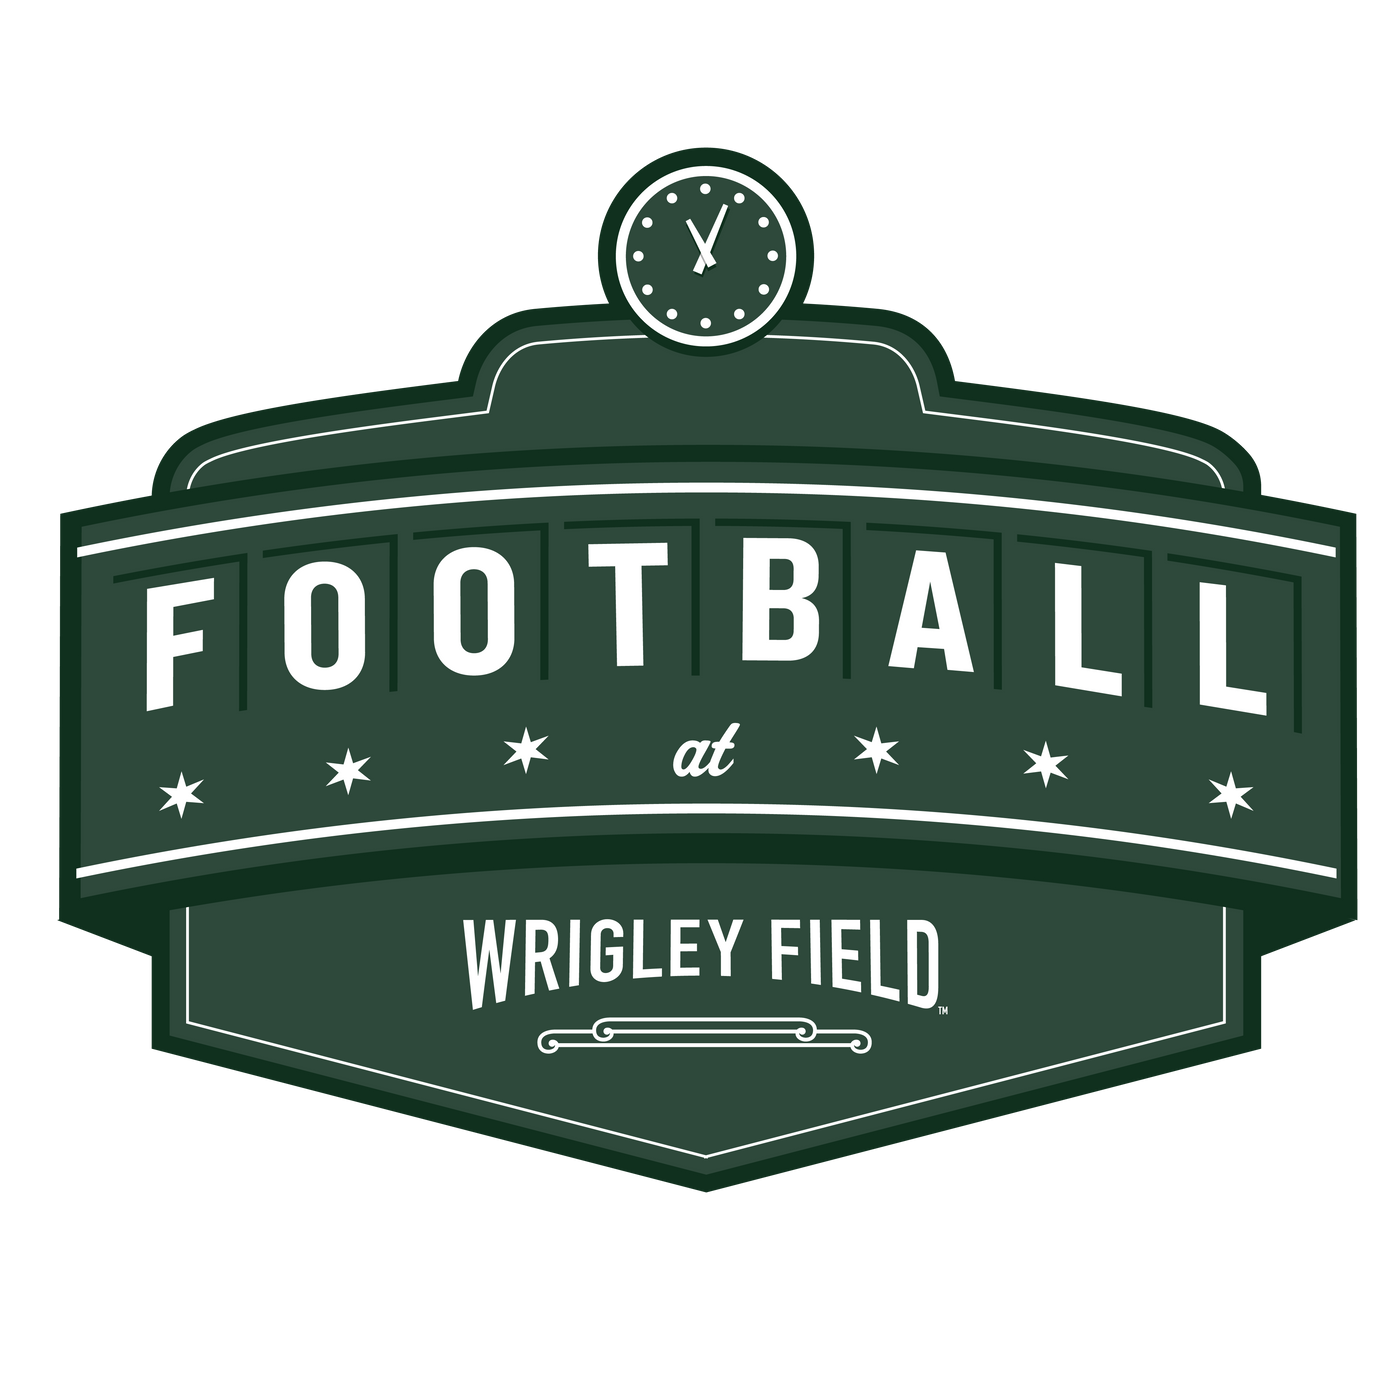 FOOTBALL AT WRIGLEY FIELD